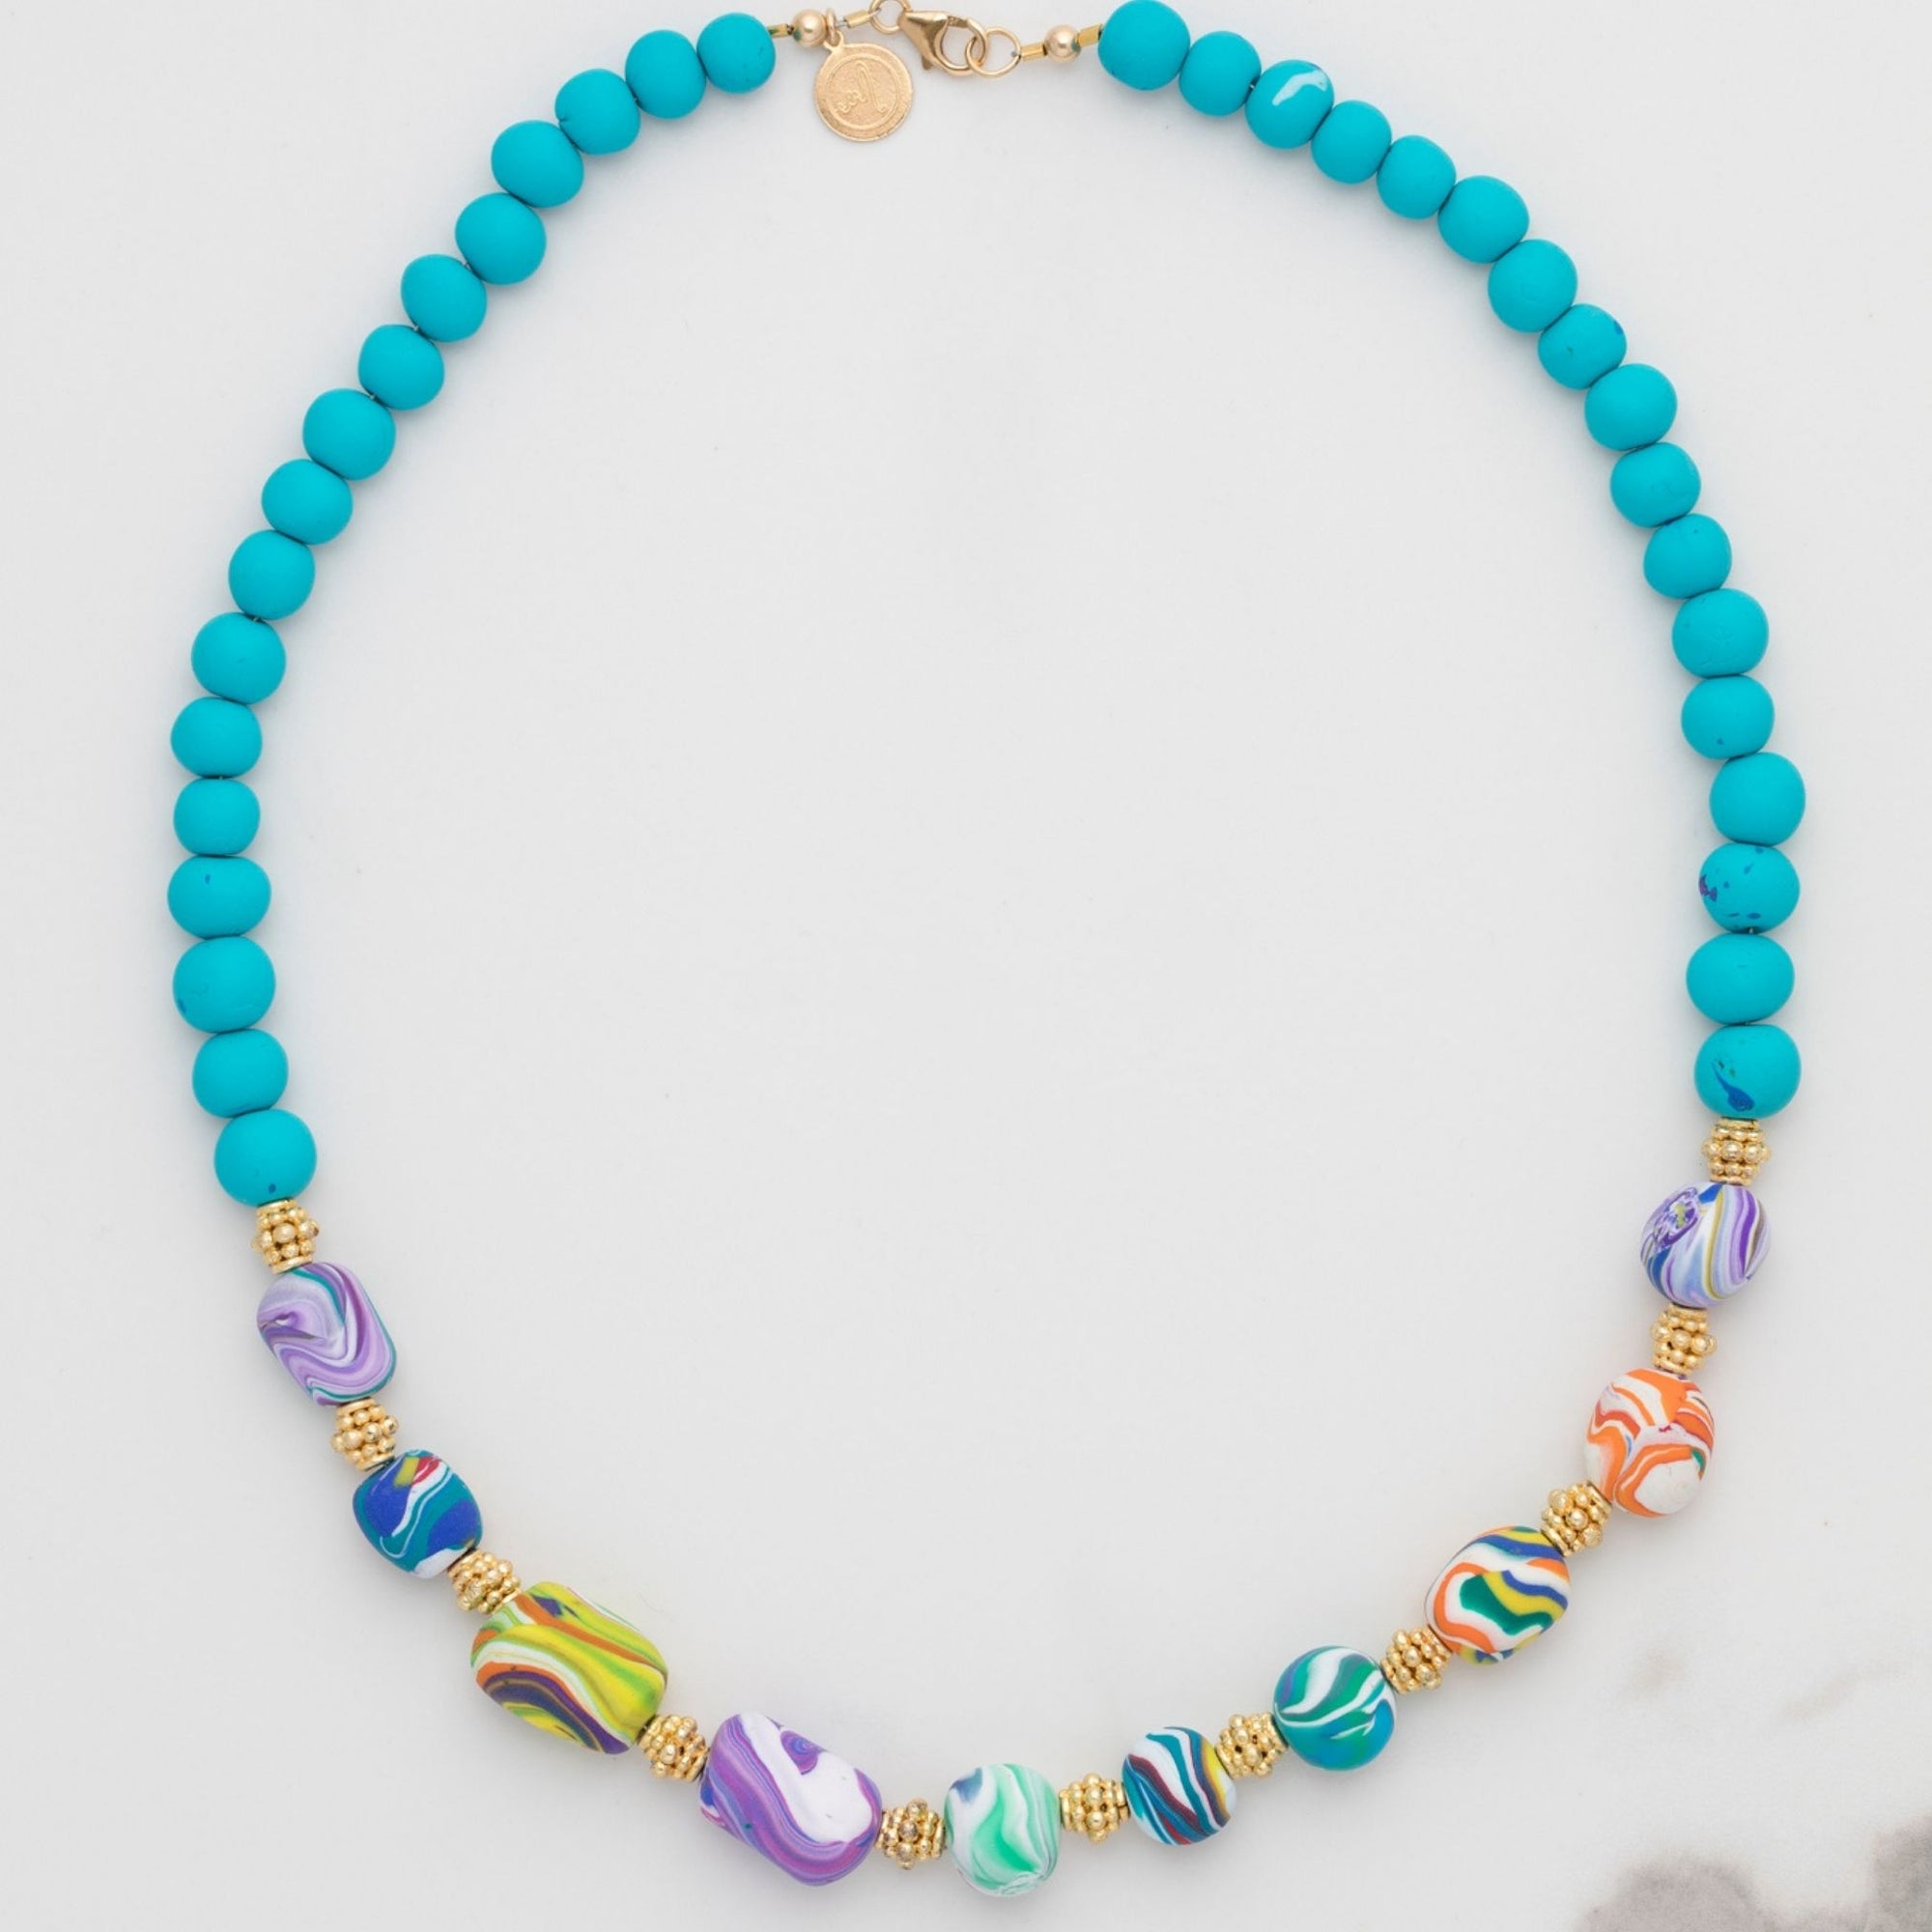 SHOP Necklaces with Marina-ra Handmade Beads